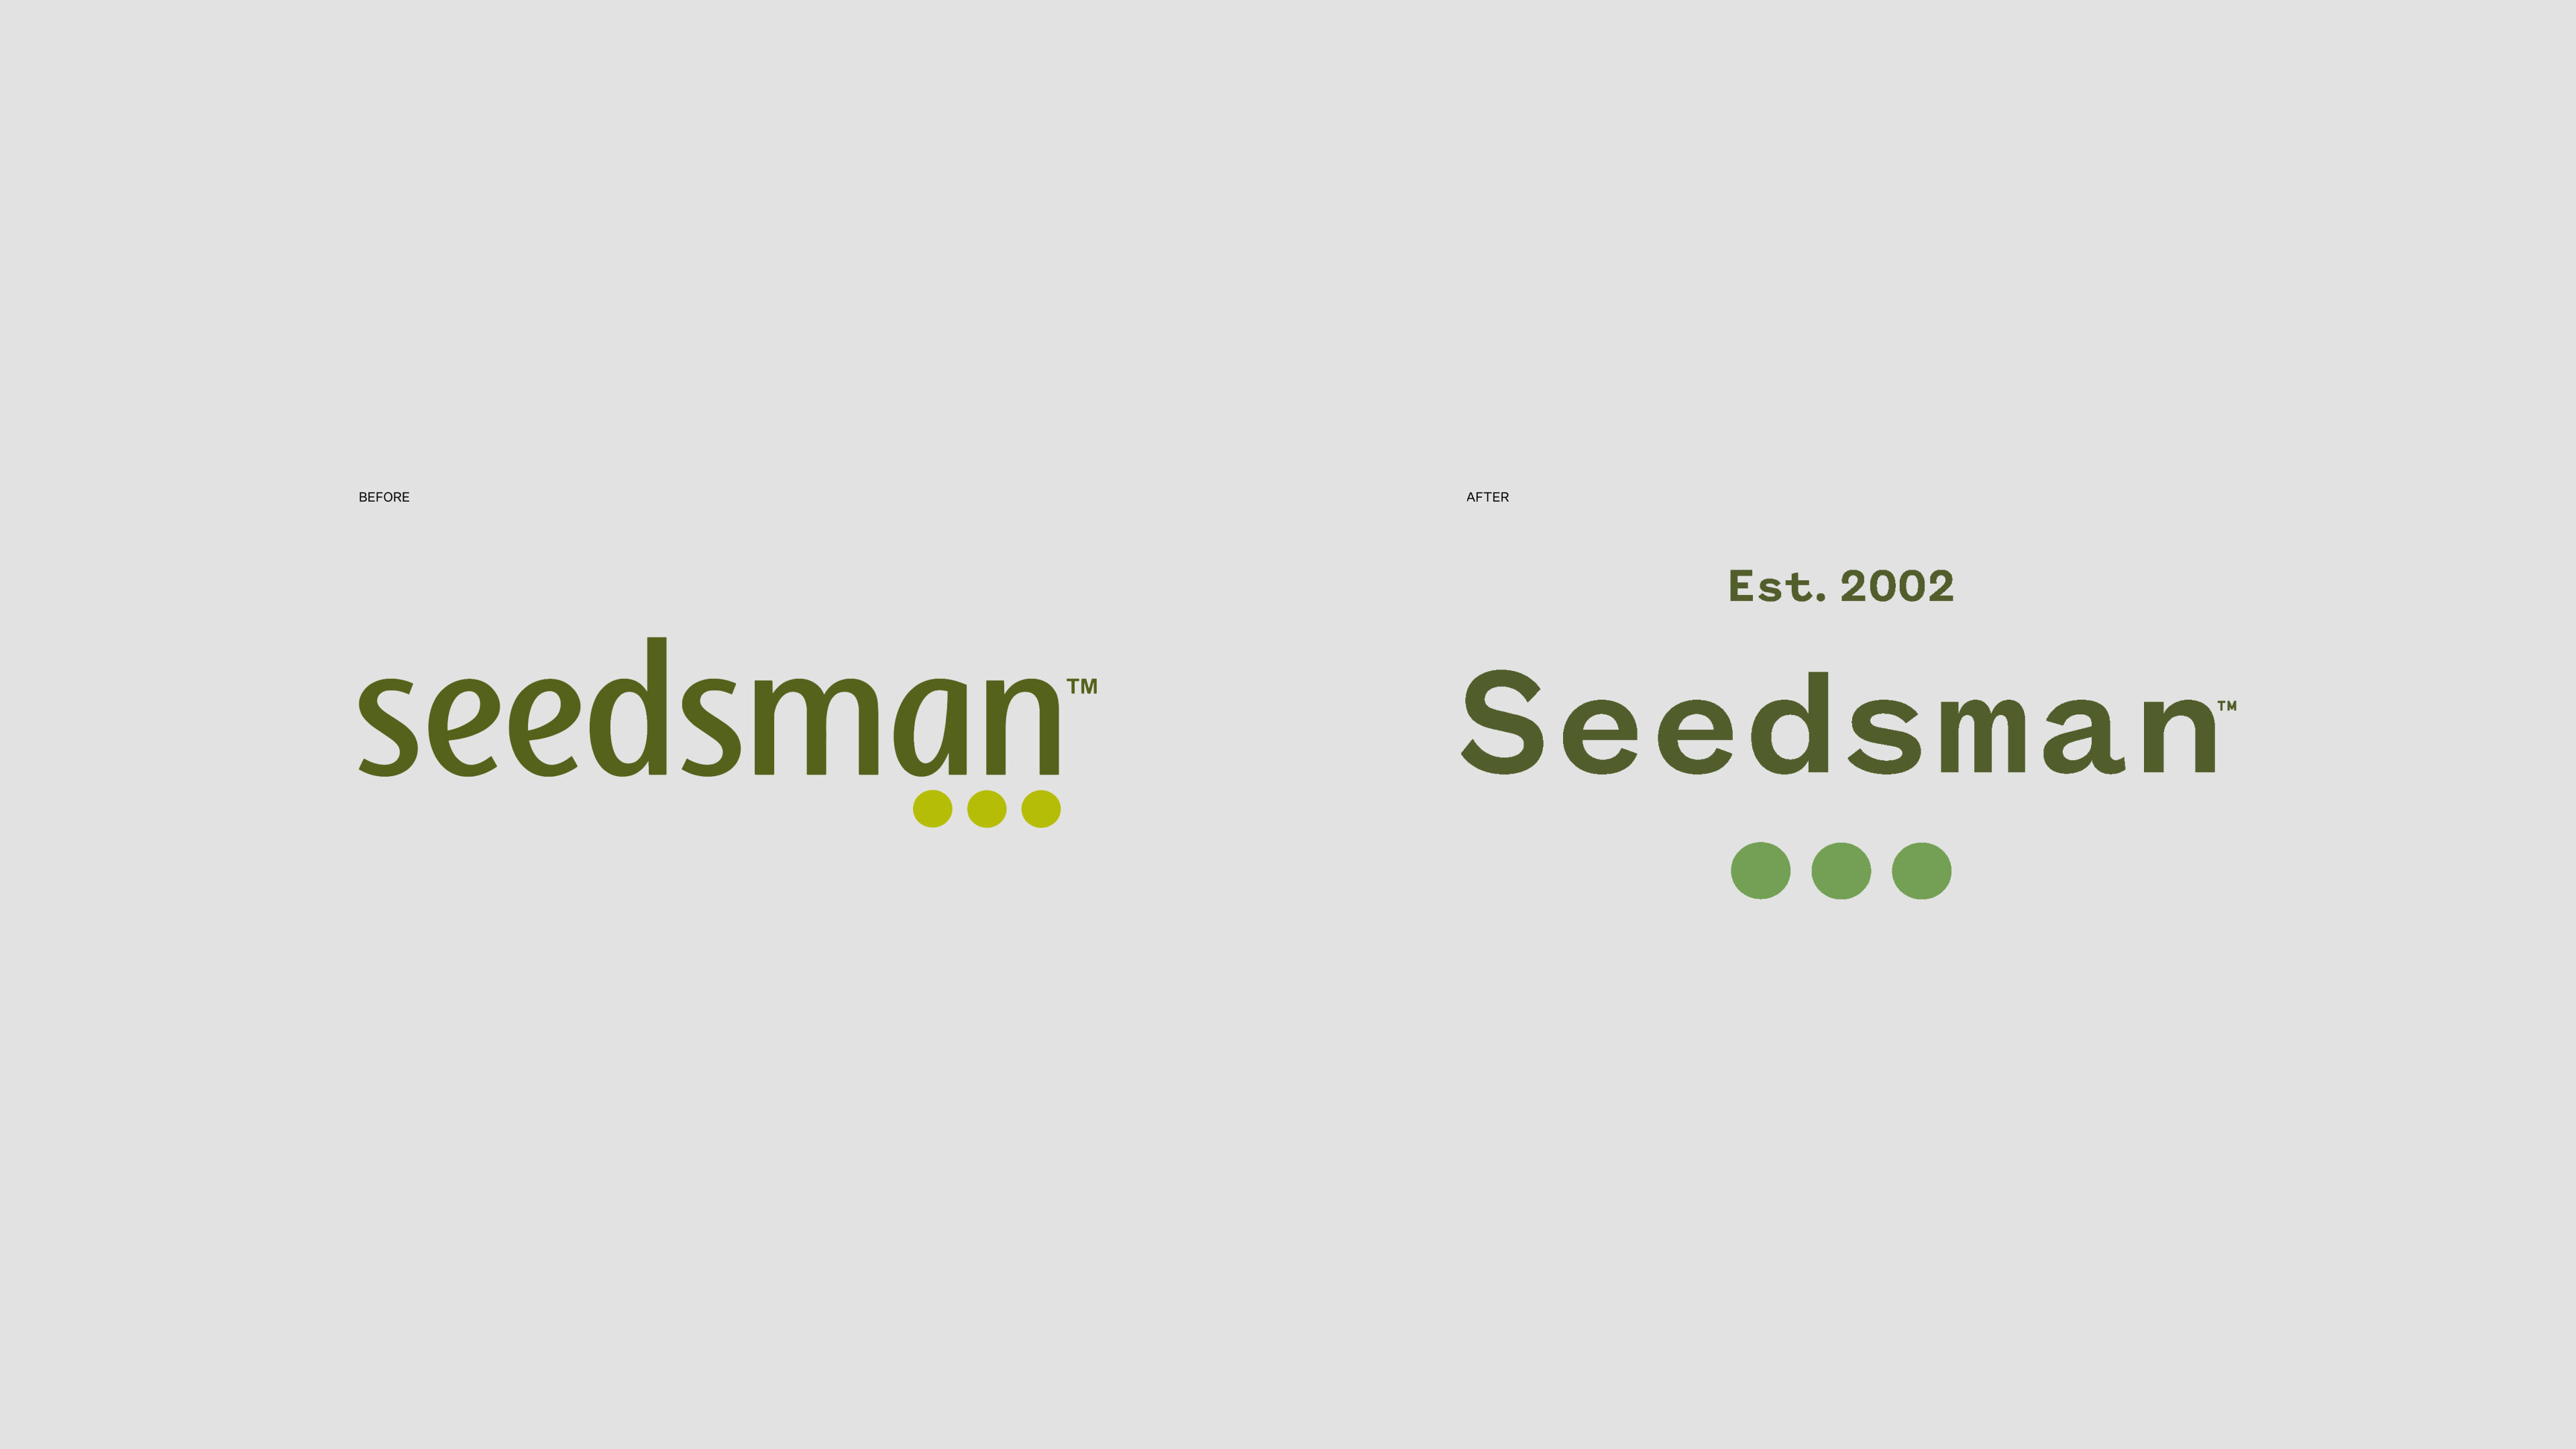 Seedsman compare2